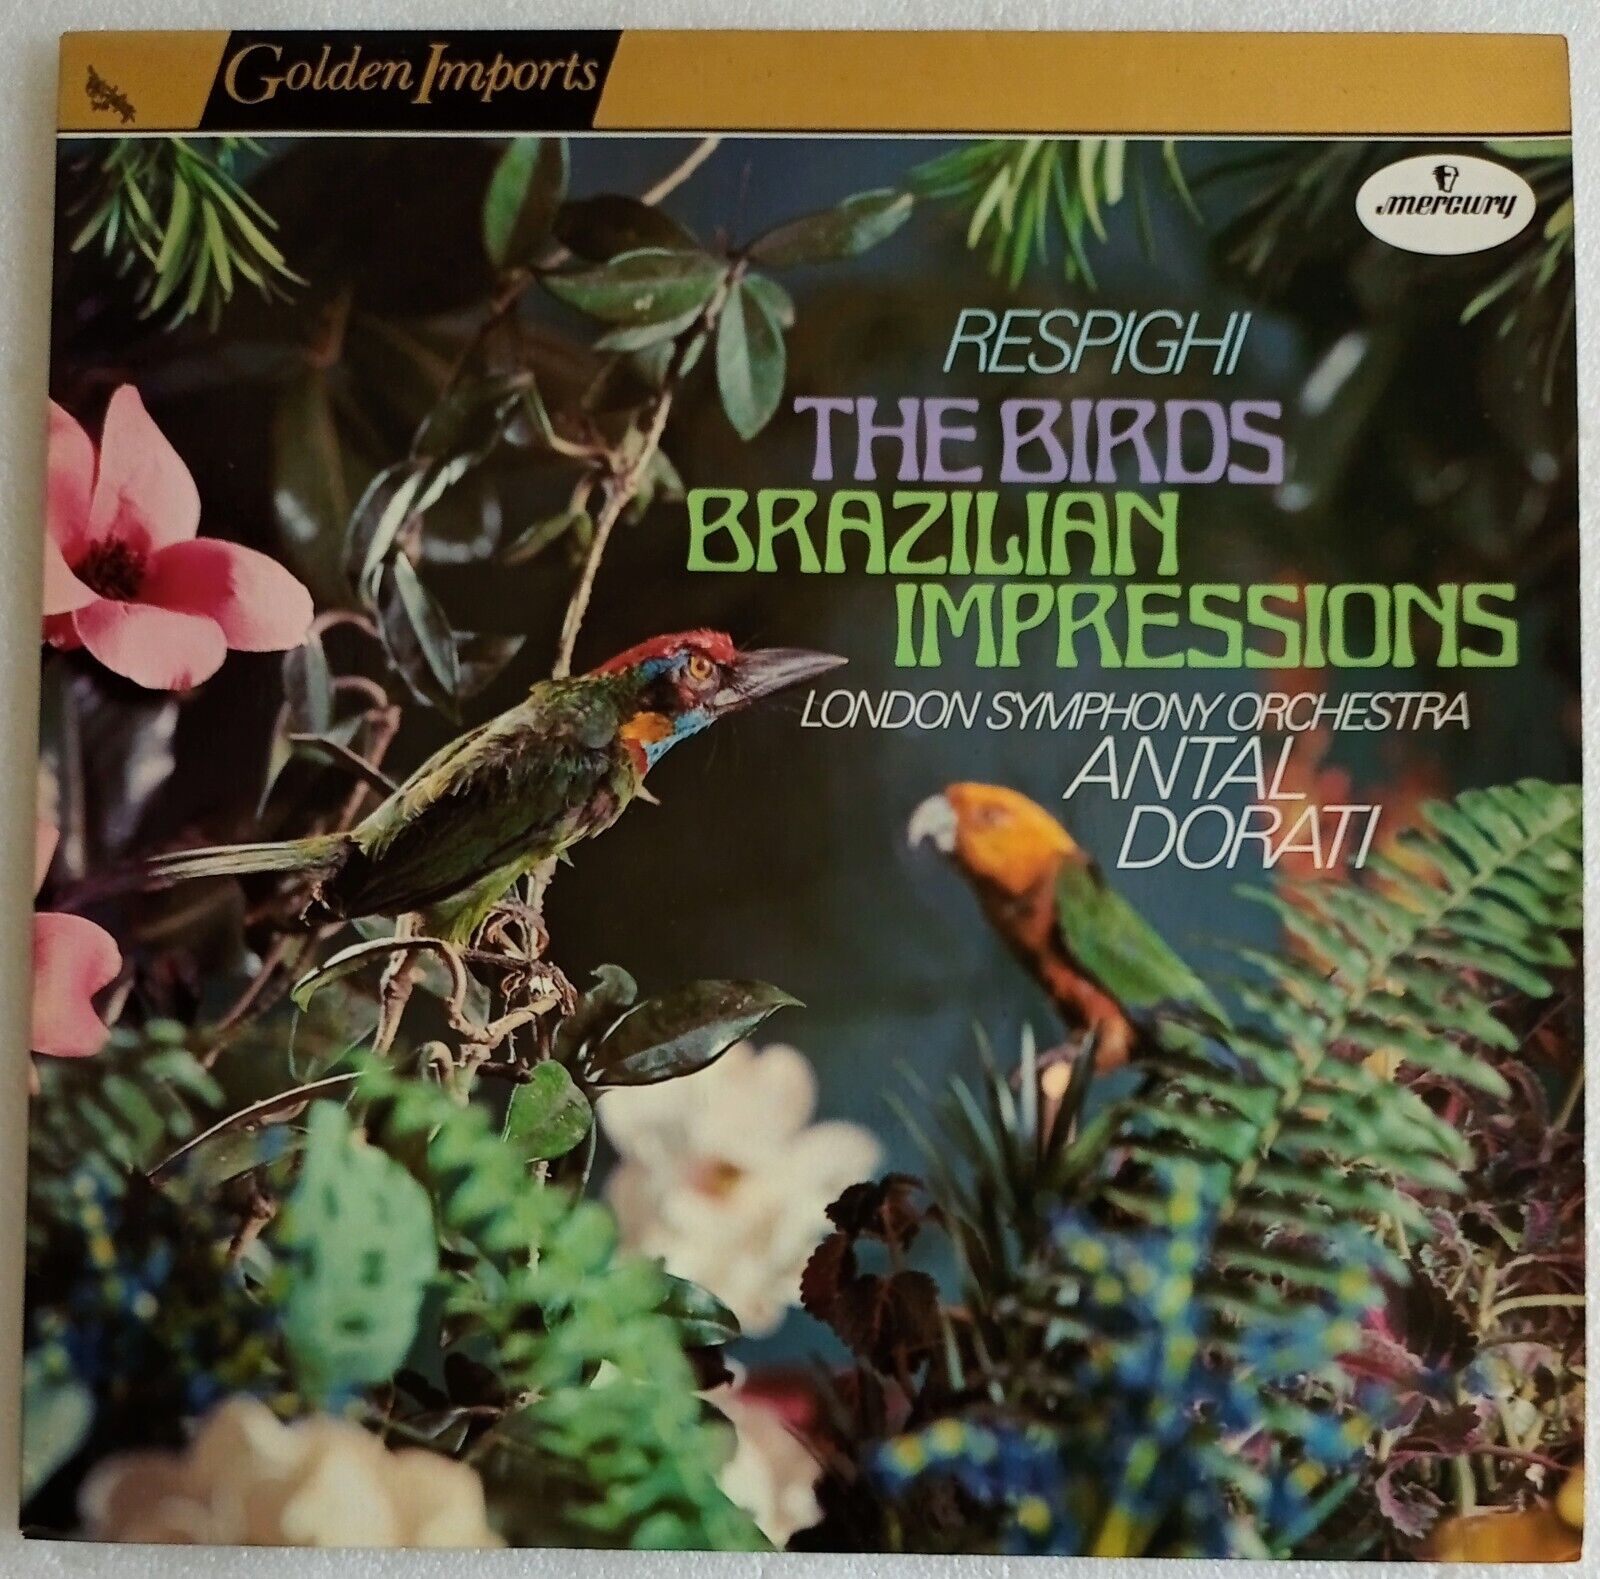 LONDON SYMPHONY ORCHESTRA "RESPIGHI THE BIRDS" MERCURY SGI 75023 VINYL LP